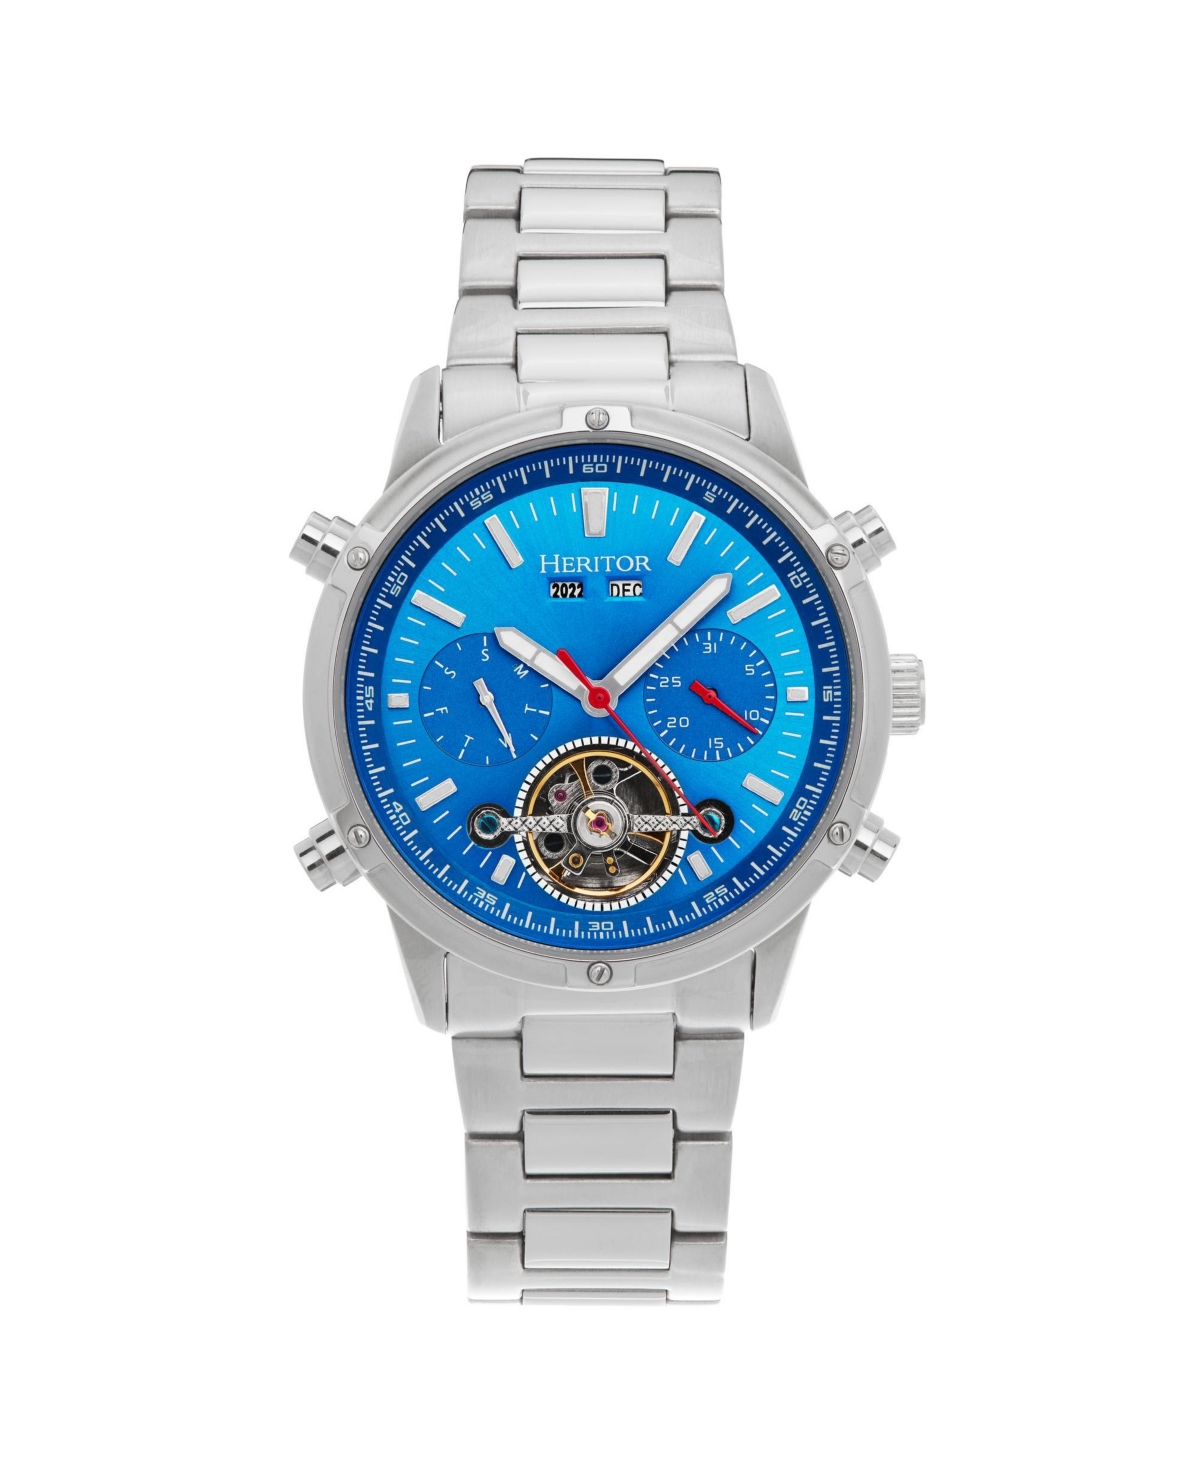 Men Wilhelm Stainless Steel Watch - Silver/Blue, 42mm - Silver/blue